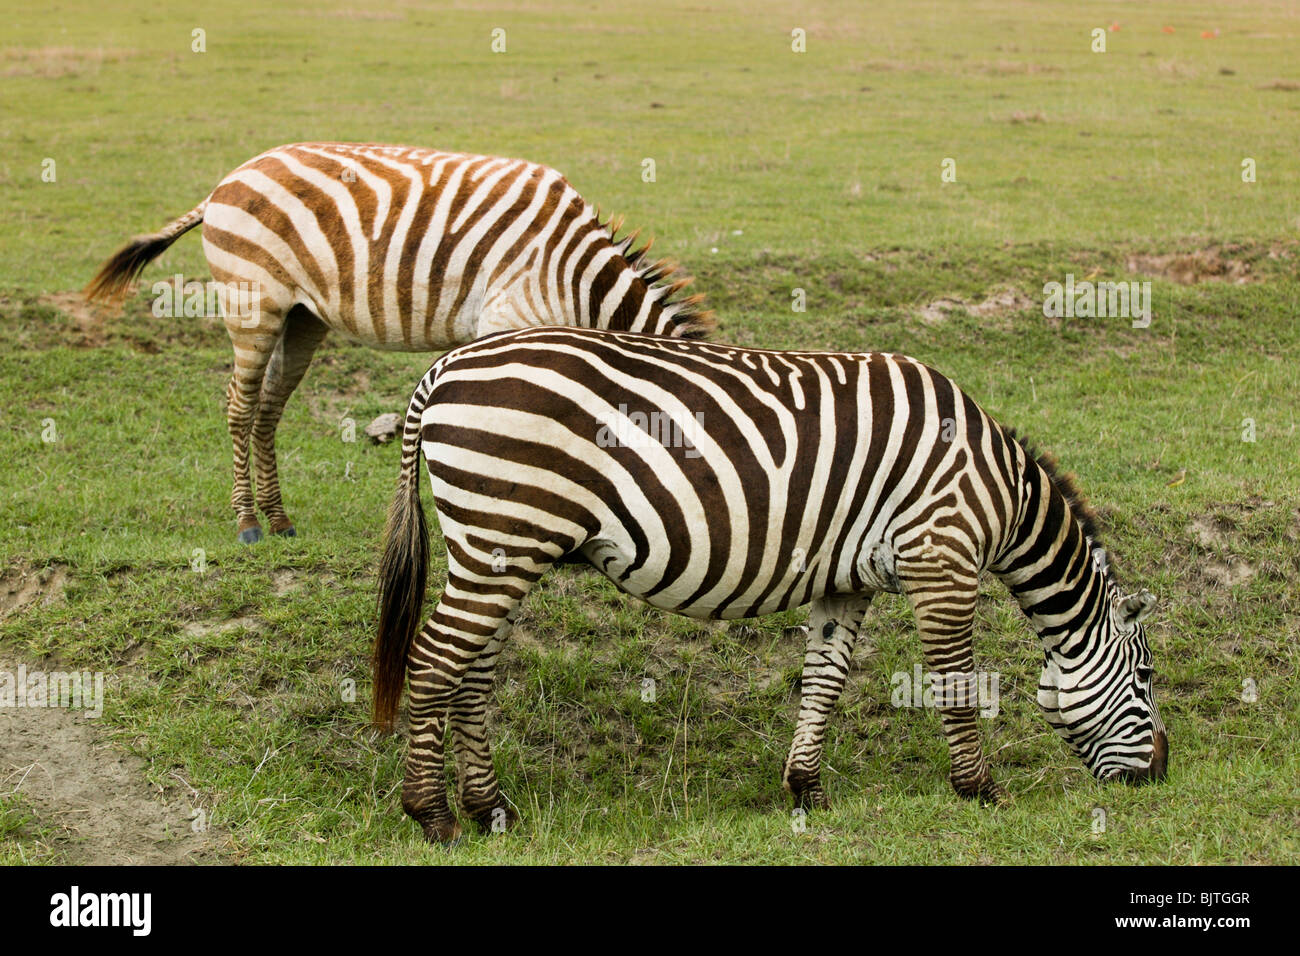 Zebras eating grass, Africa Stock Photo